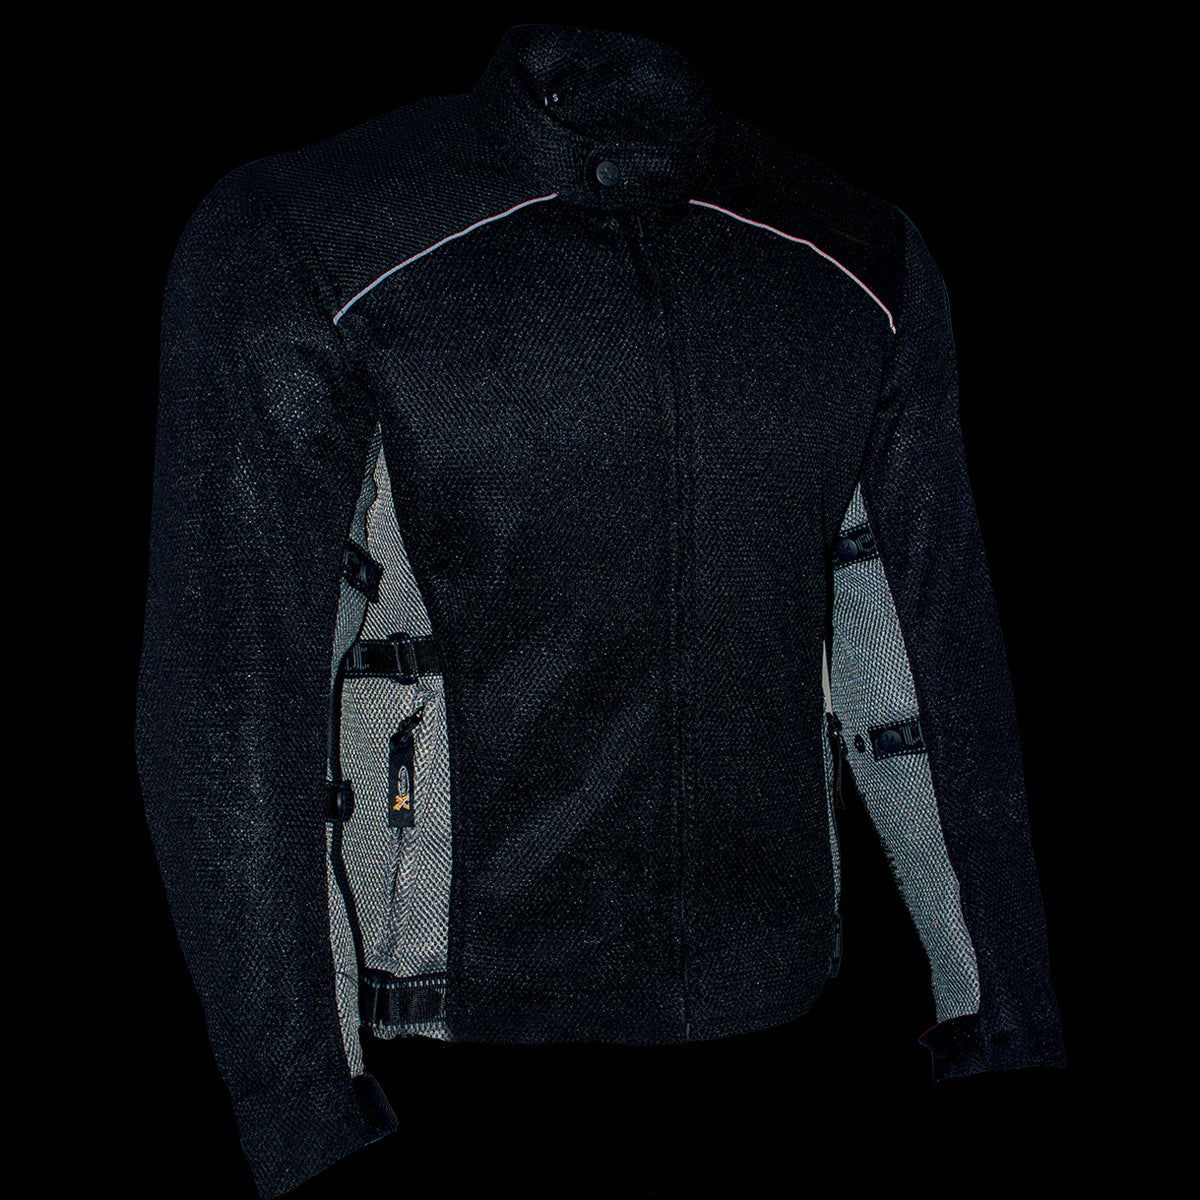 Xelement CF505 Men's 'Phantom Rider' Black Advanced Mesh Sports Motorcycle Jacket with X-Armor Protection